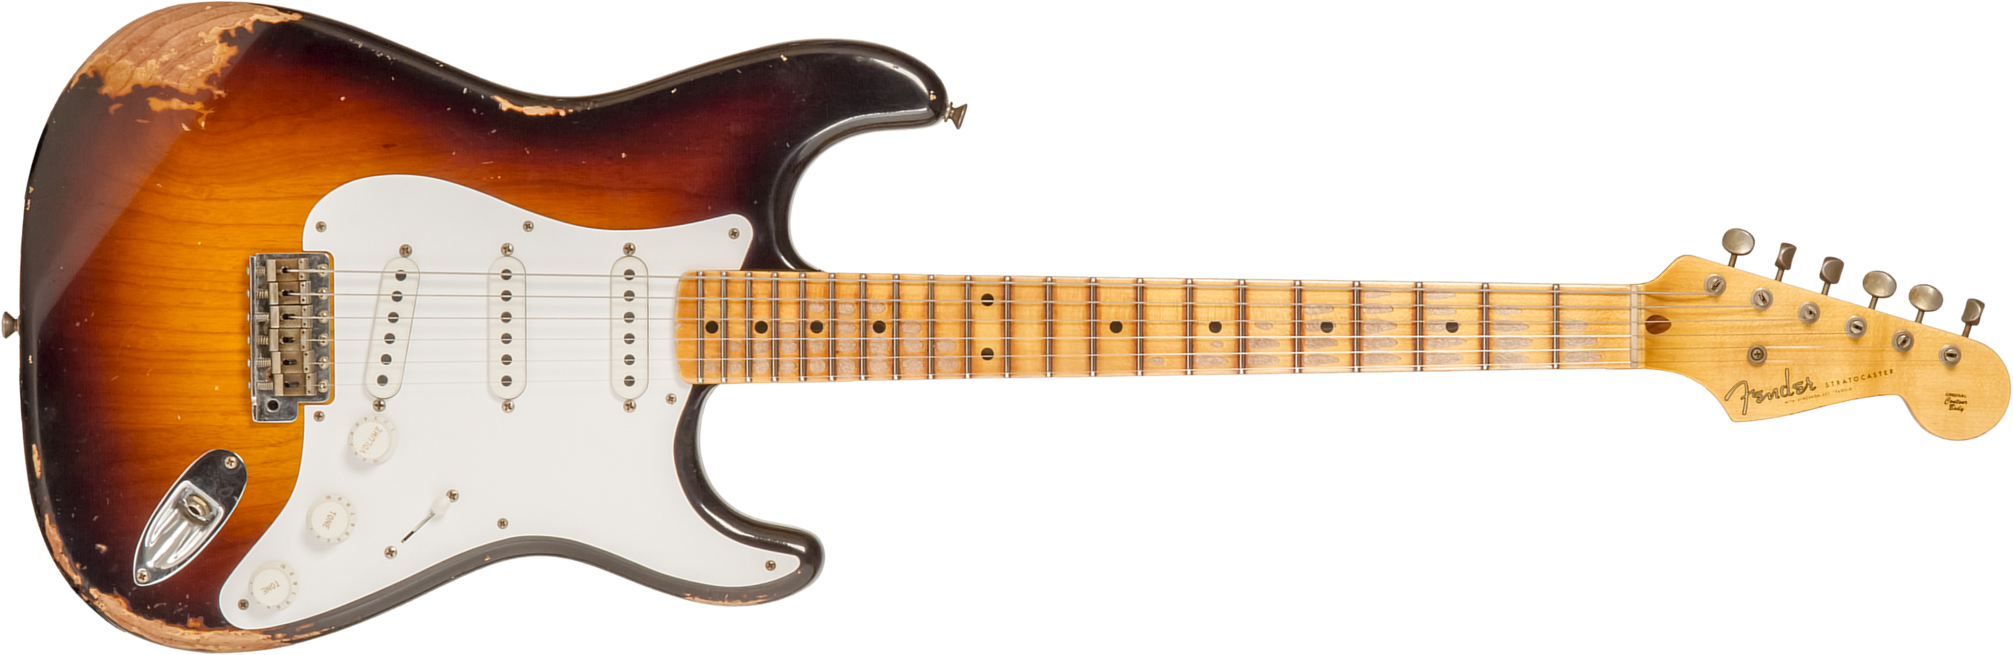 Fender Custom Shop Strat 1954 70th Anniv. 3s Trem Mn #xn4309 - Heavy Relic Wide Fade 2-color Sunburst - Str shape electric guitar - Main picture